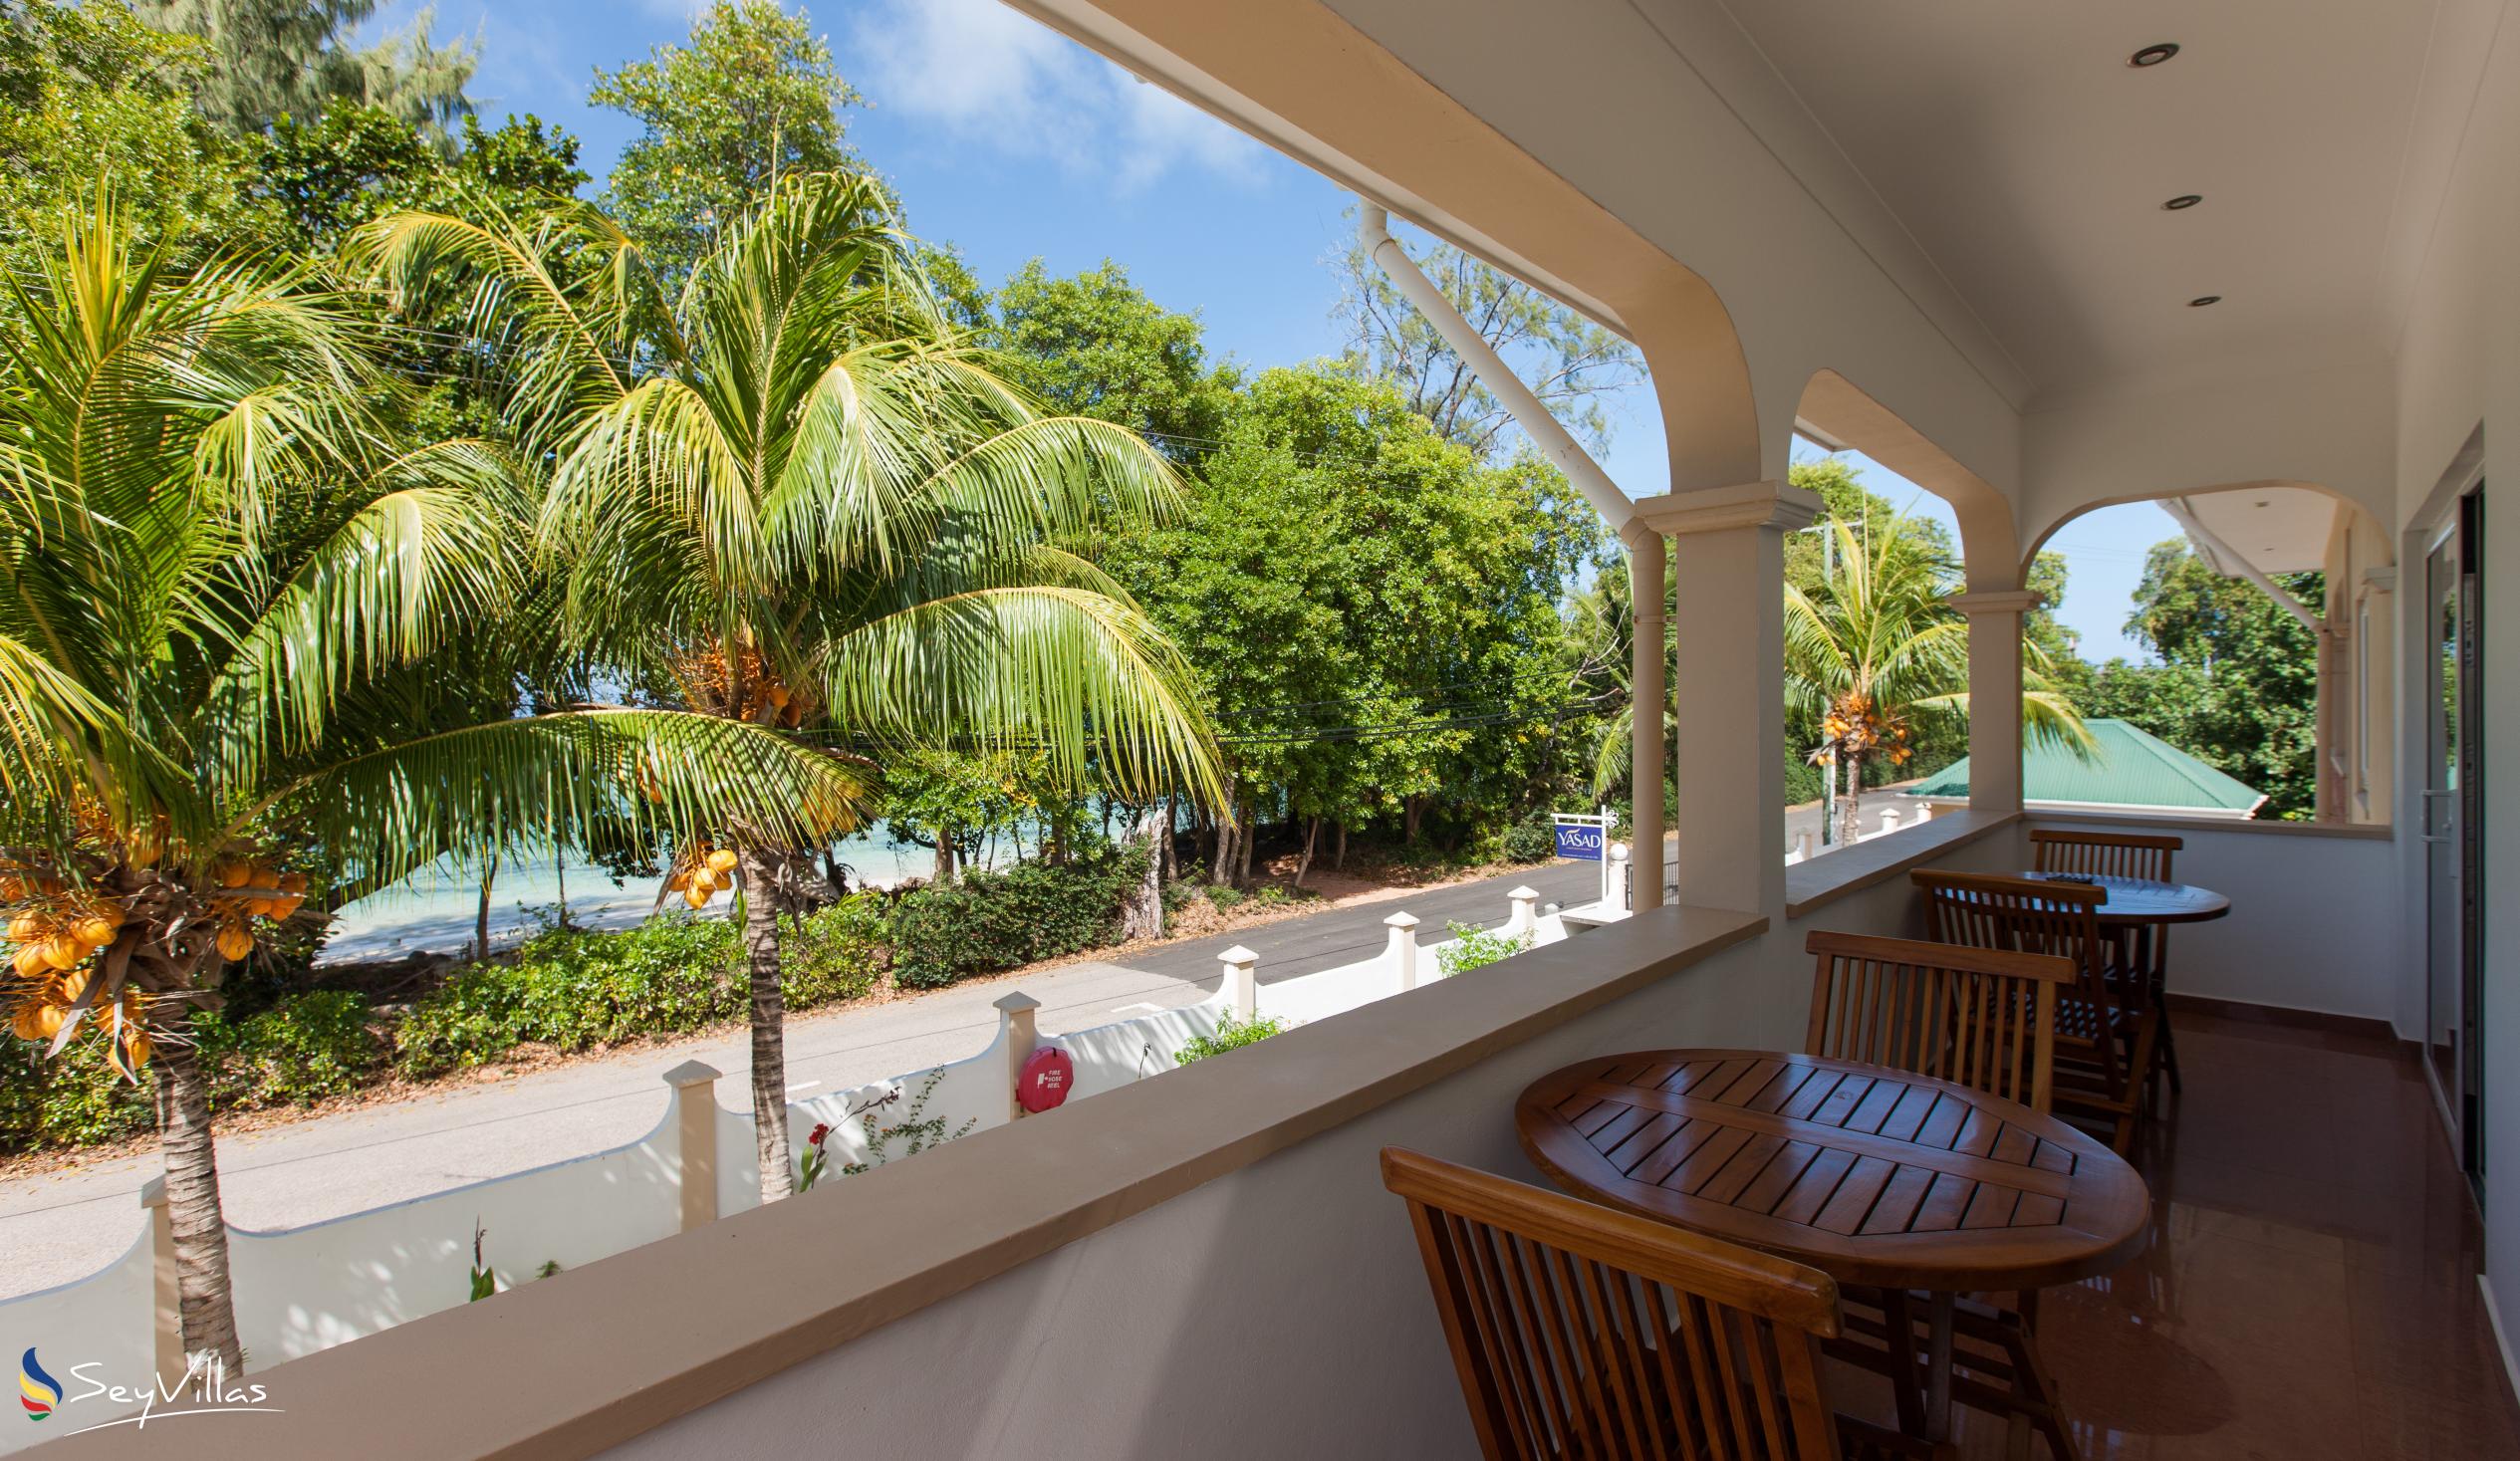 Foto 93: YASAD Luxury Beach Residence - Appartement 3 chambres Premier Etage - Praslin (Seychelles)